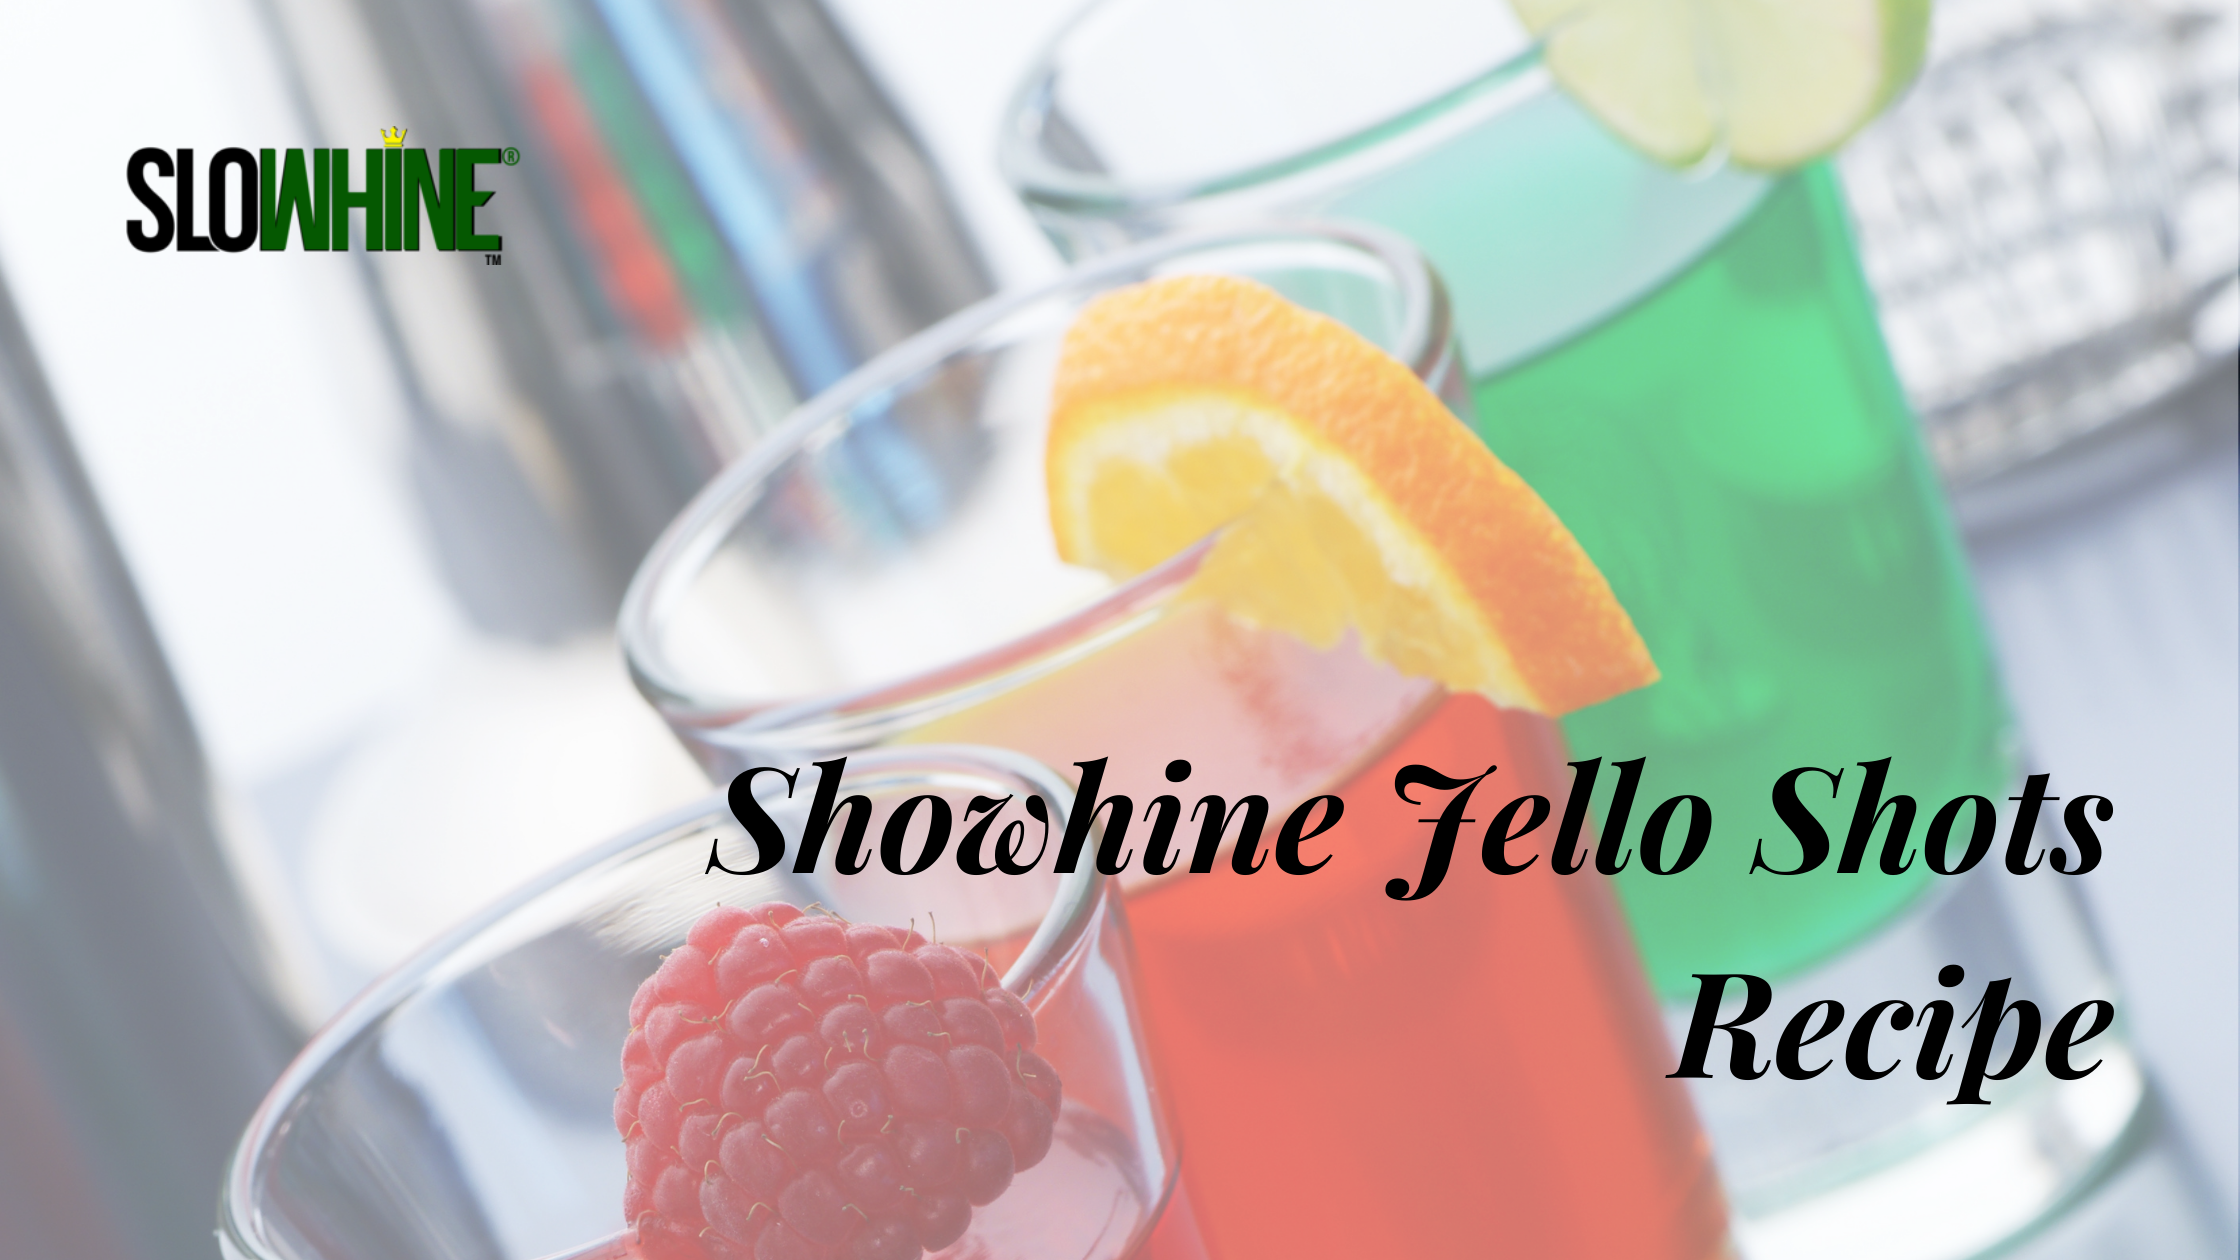 Showhine Jello Shots Recipe